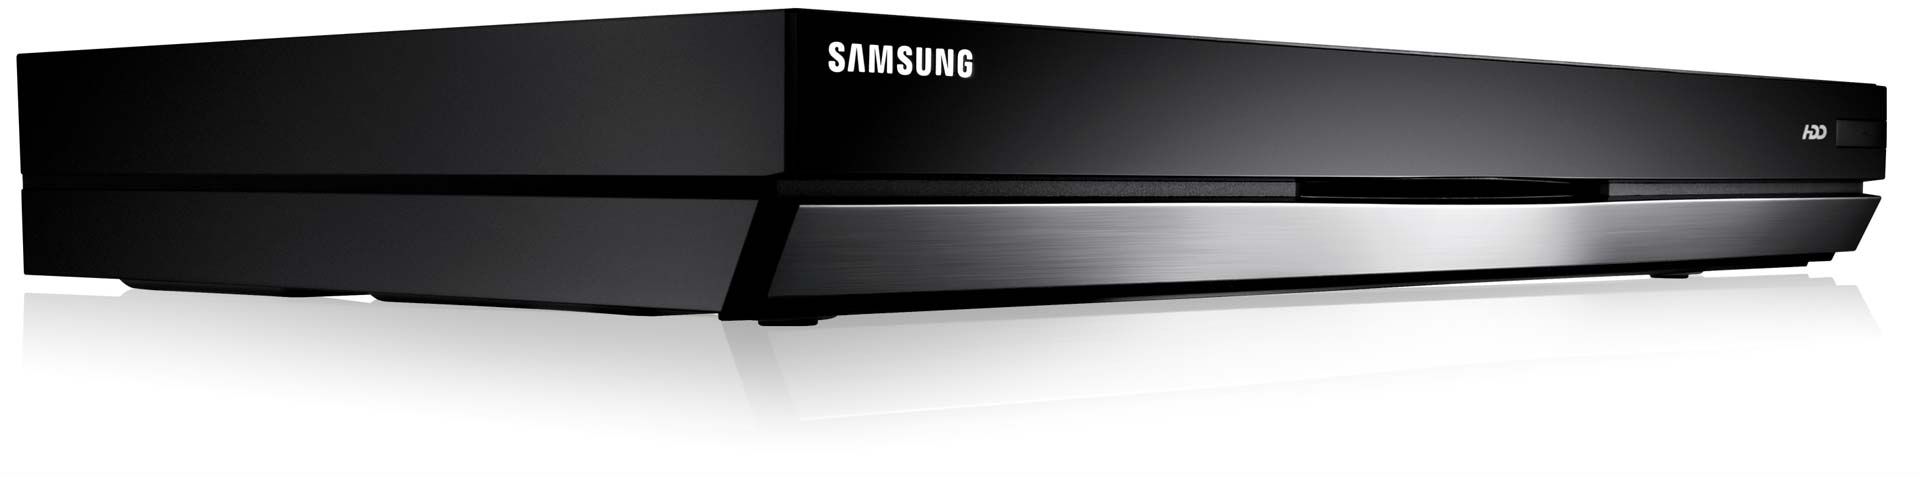 Samsung-Blu-ray_BD-E8500N